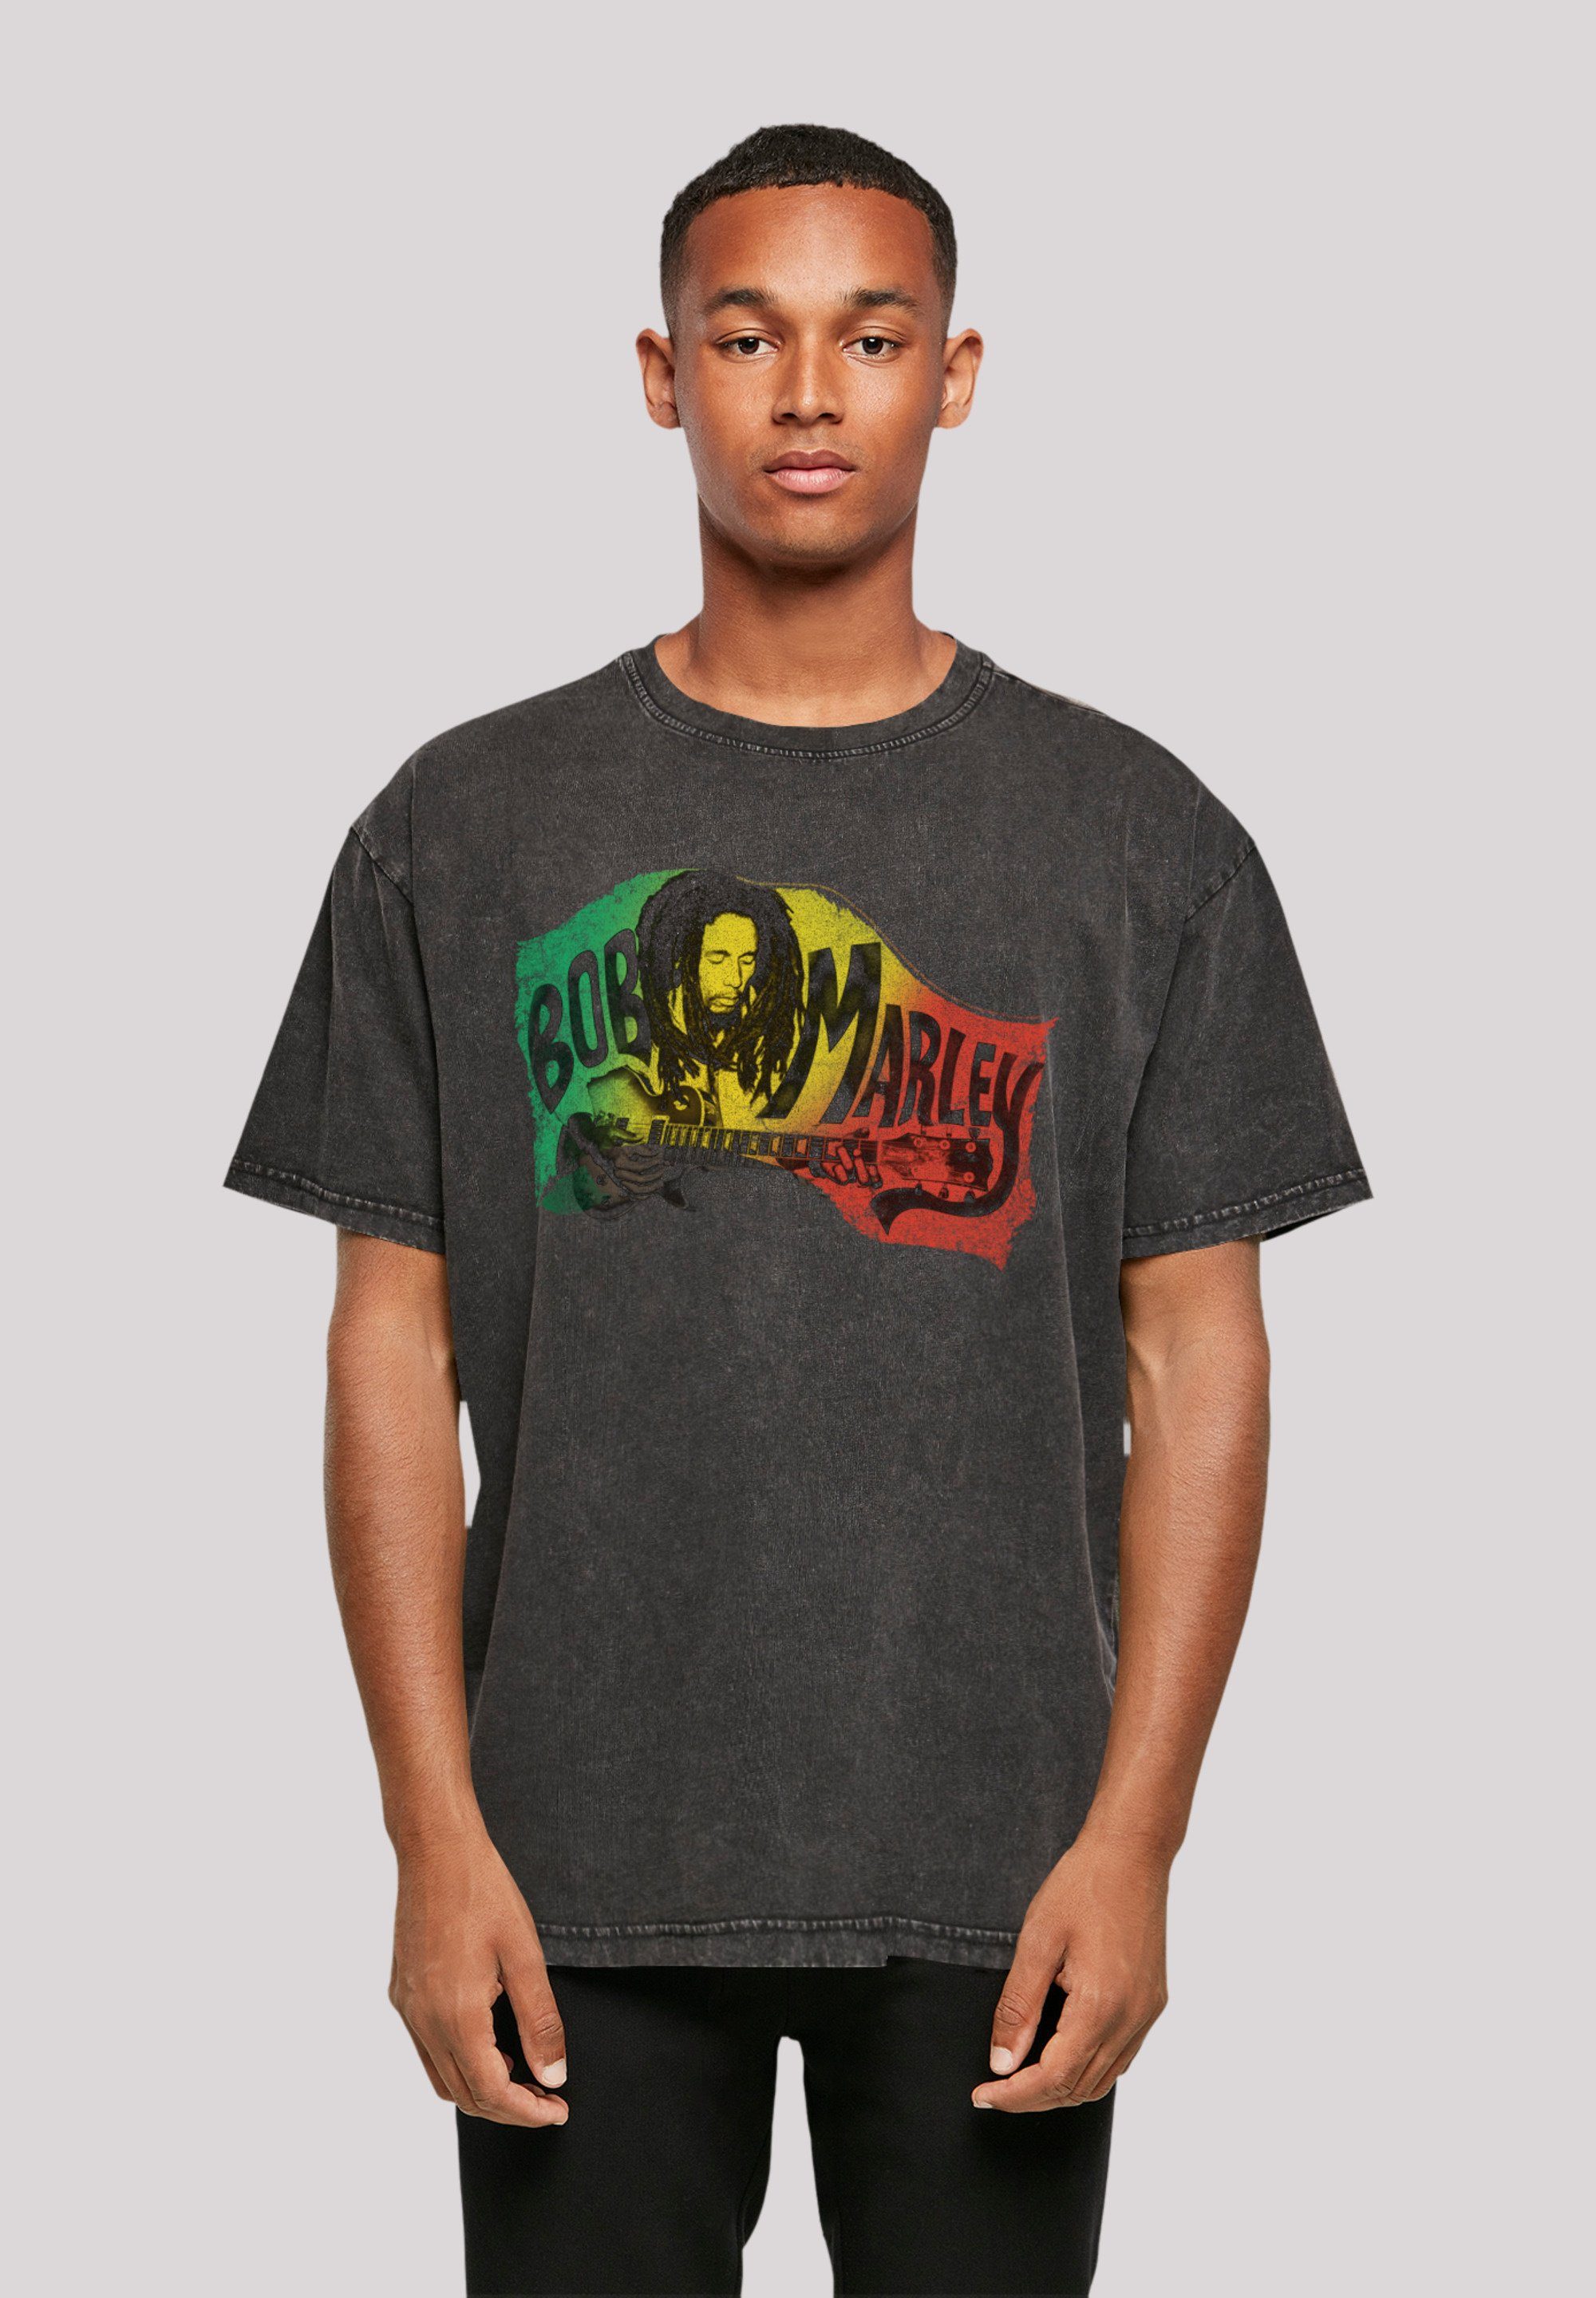 F4NT4STIC T-Shirt Bob Marley Chords Reggae Music Premium Qualität, Musik, By Rock Off schwarz